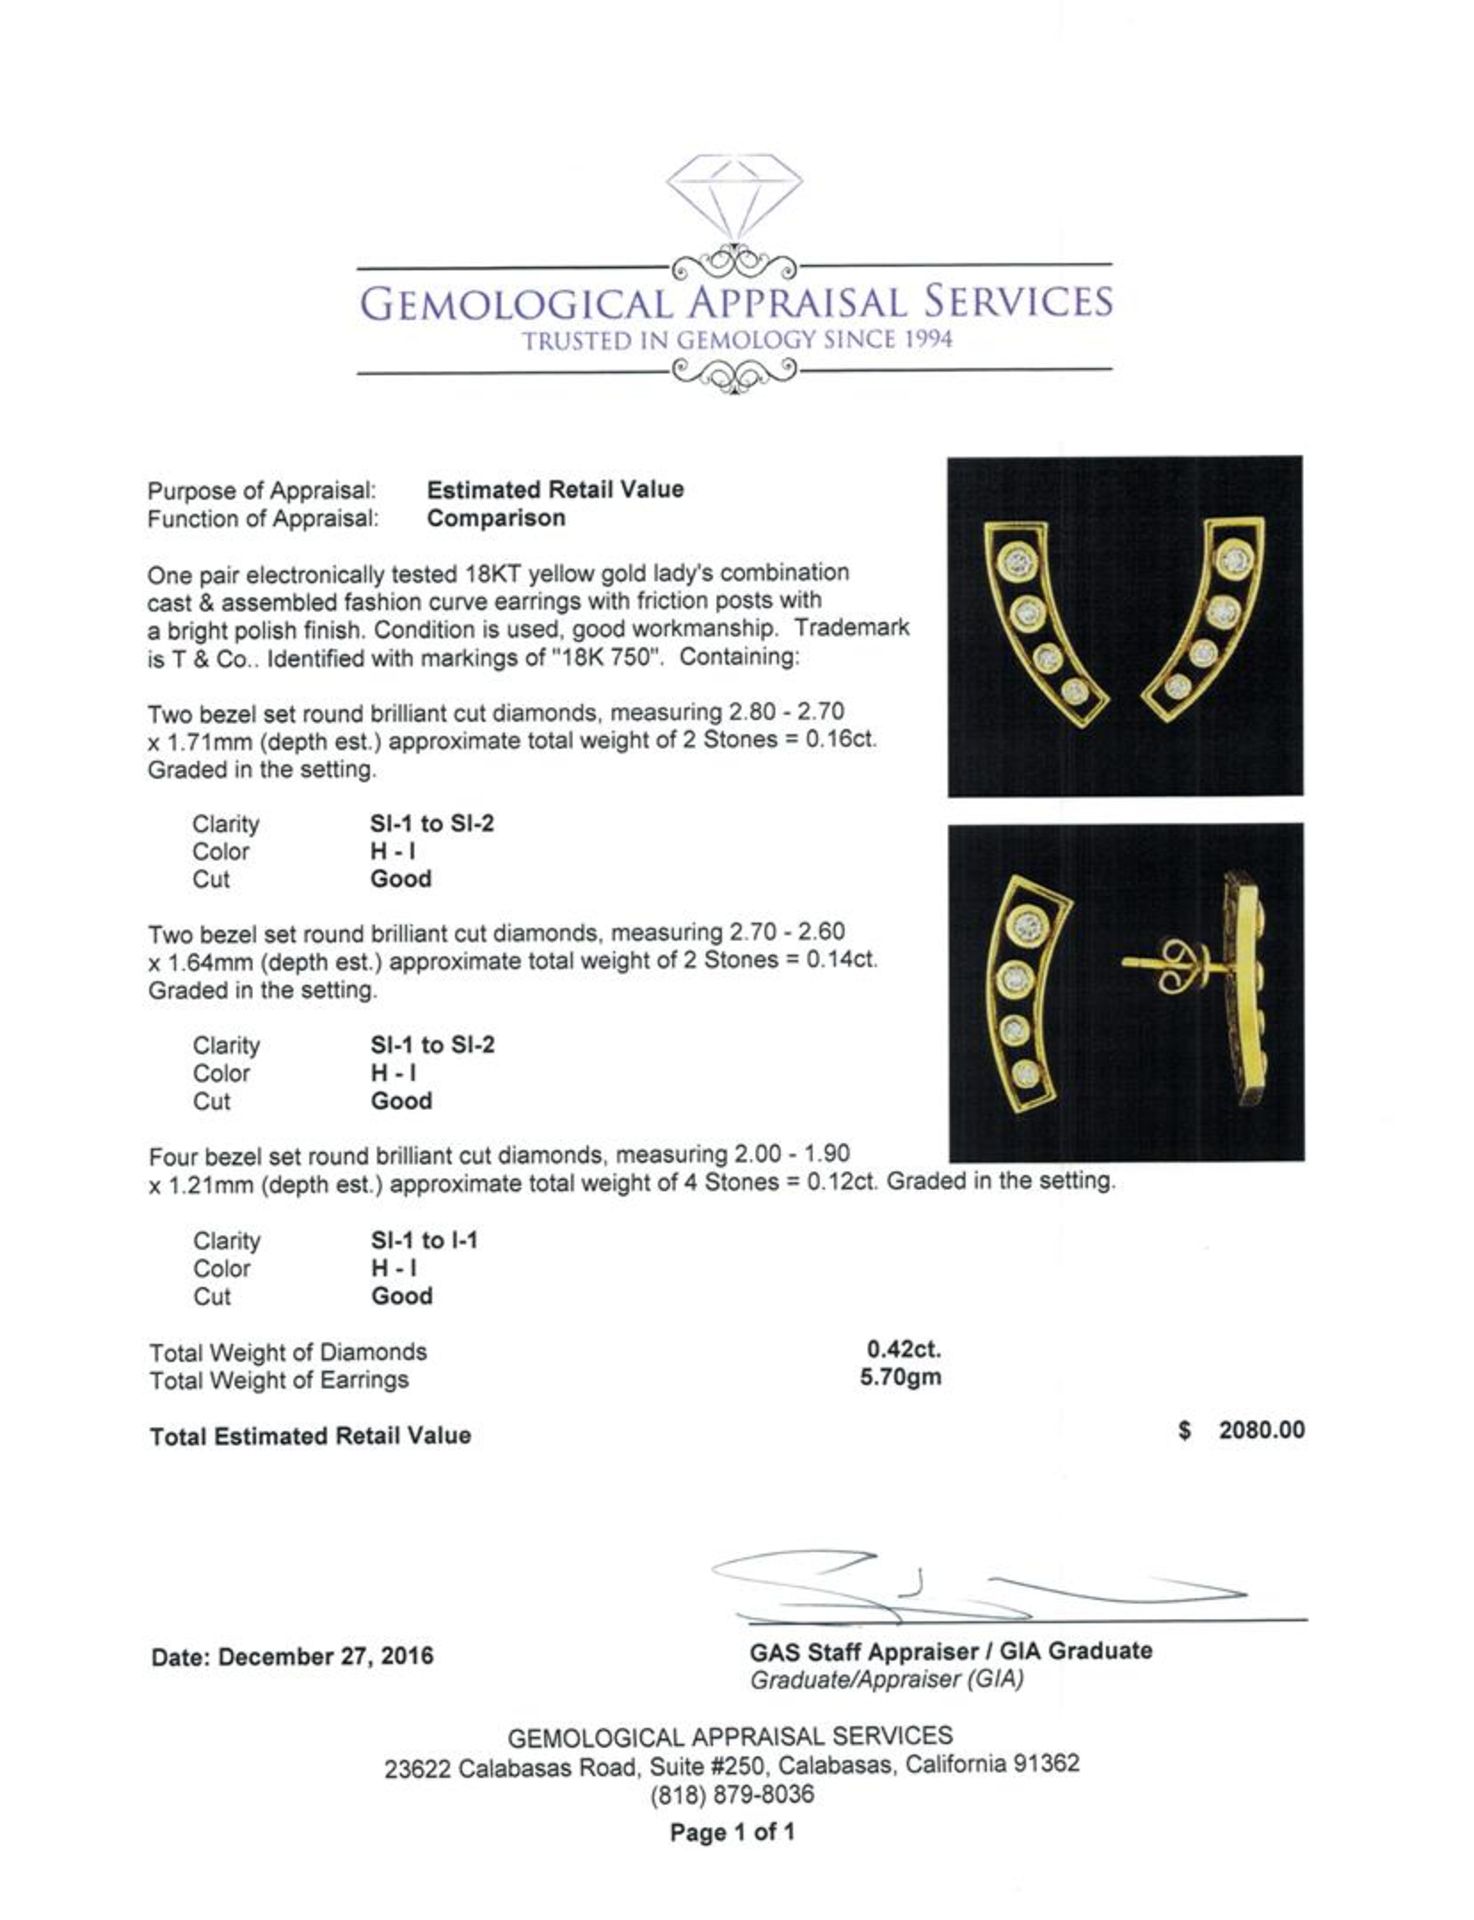 0.42 ctw Diamond Earrings - 18KT Yellow Gold - Image 3 of 3